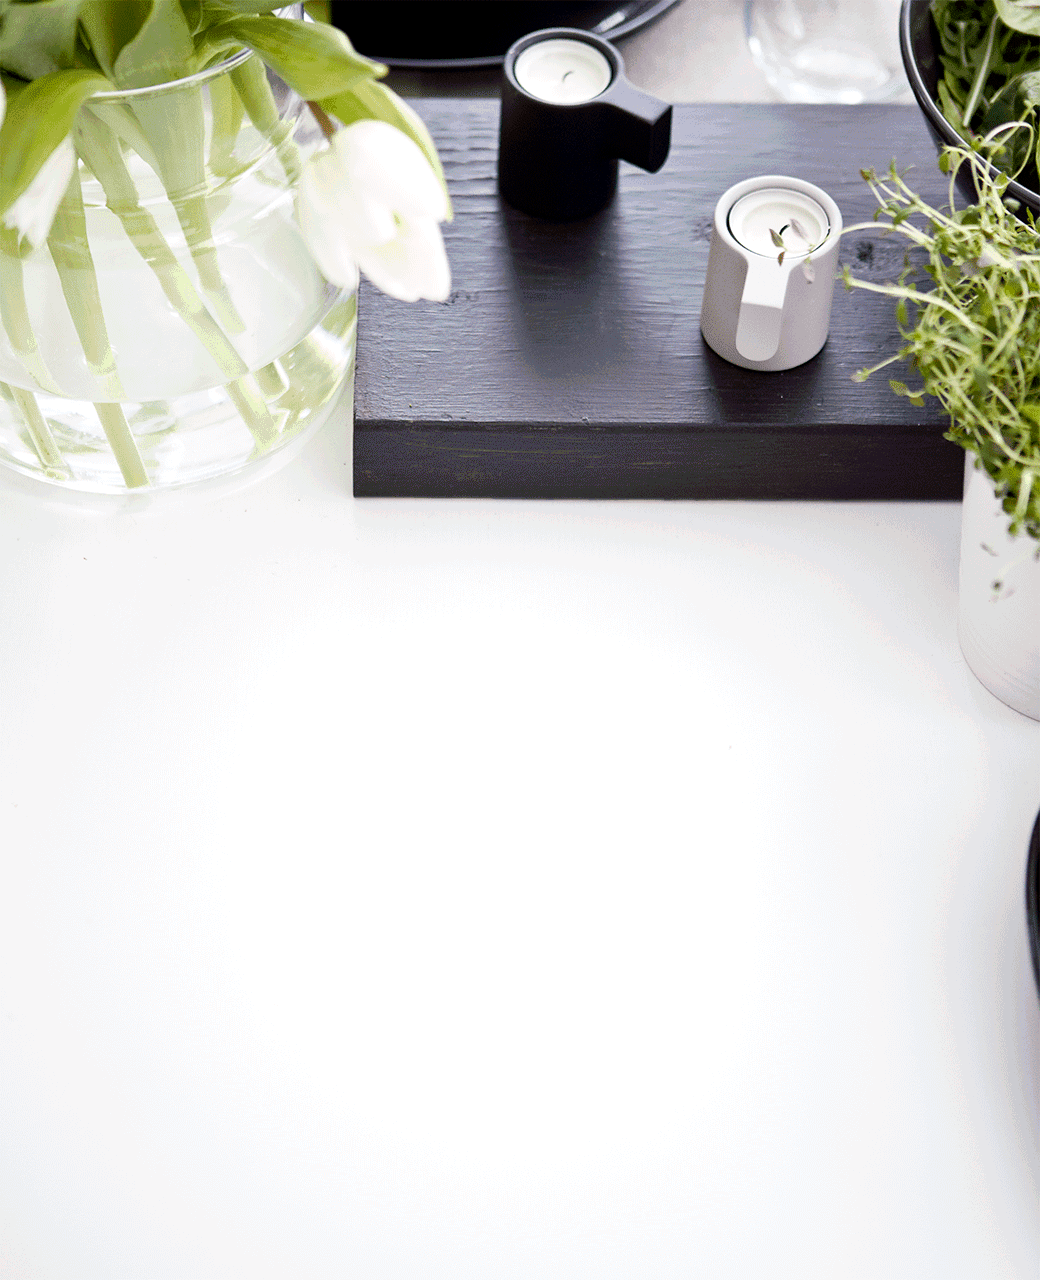 IKEA Ideas - A striking monochrome table setting